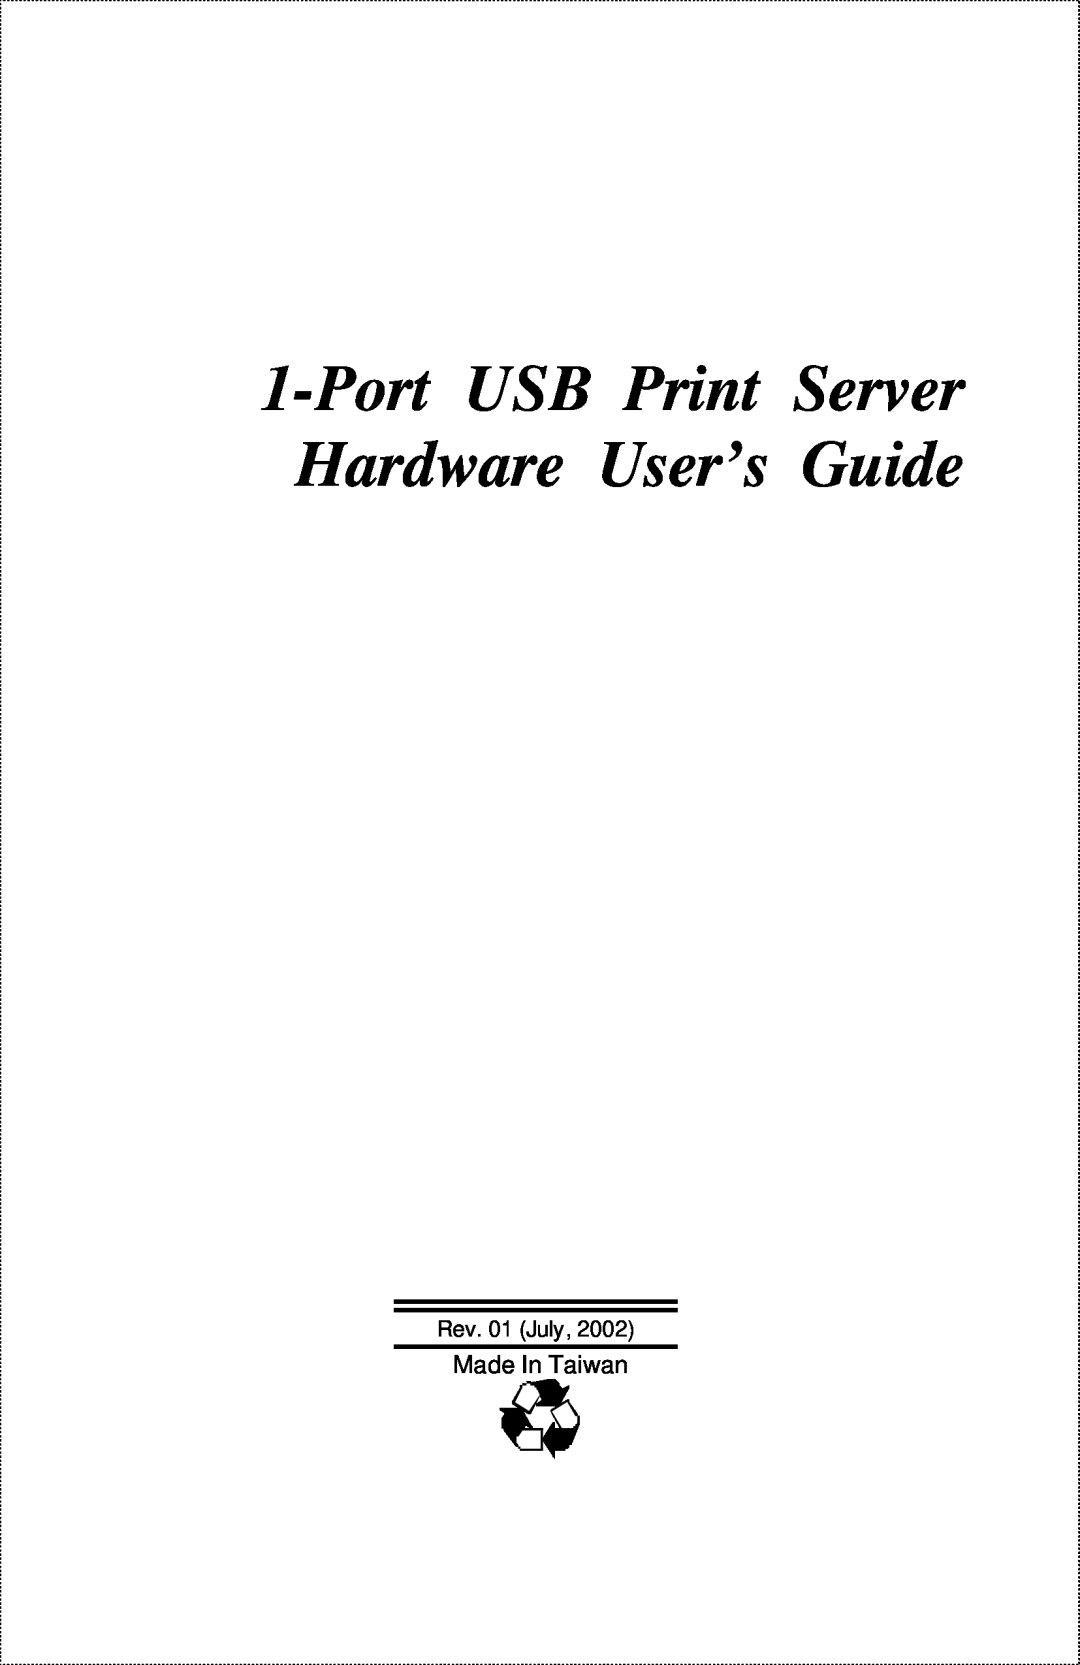 IBM 1-Port USB Print Server manual Port USB Print Server Hardware User’s Guide, Made In Taiwan, Rev. 01 July 